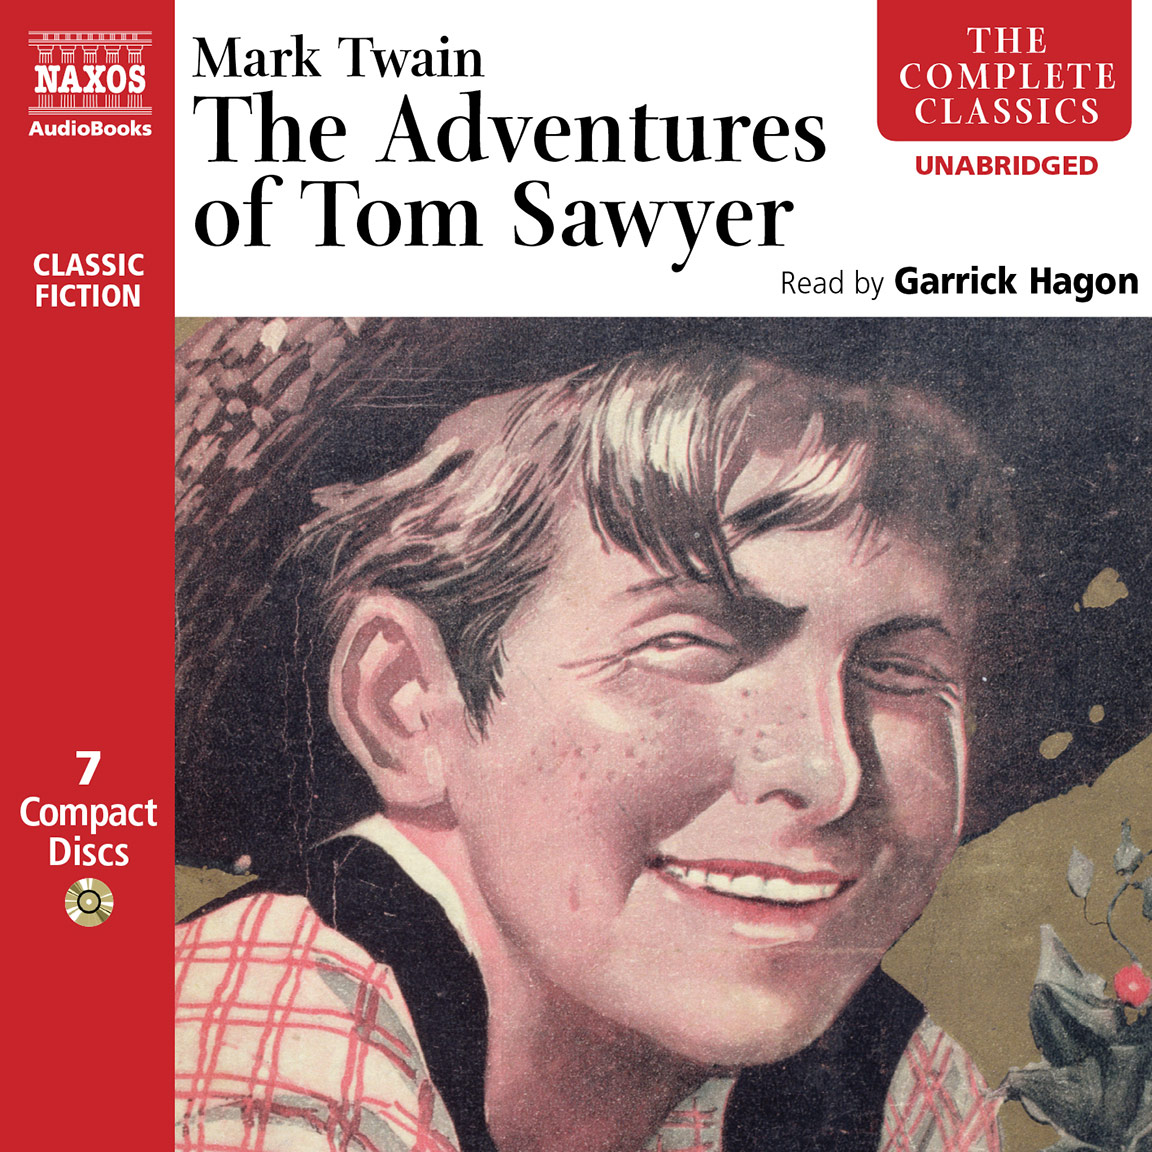 Mark Twain the Adventures of Tom Sawyer. Adventures of Tom Sawyer Audiobook. Tom Sawyer book. The Adventures of Tom Sawyer book Cover.